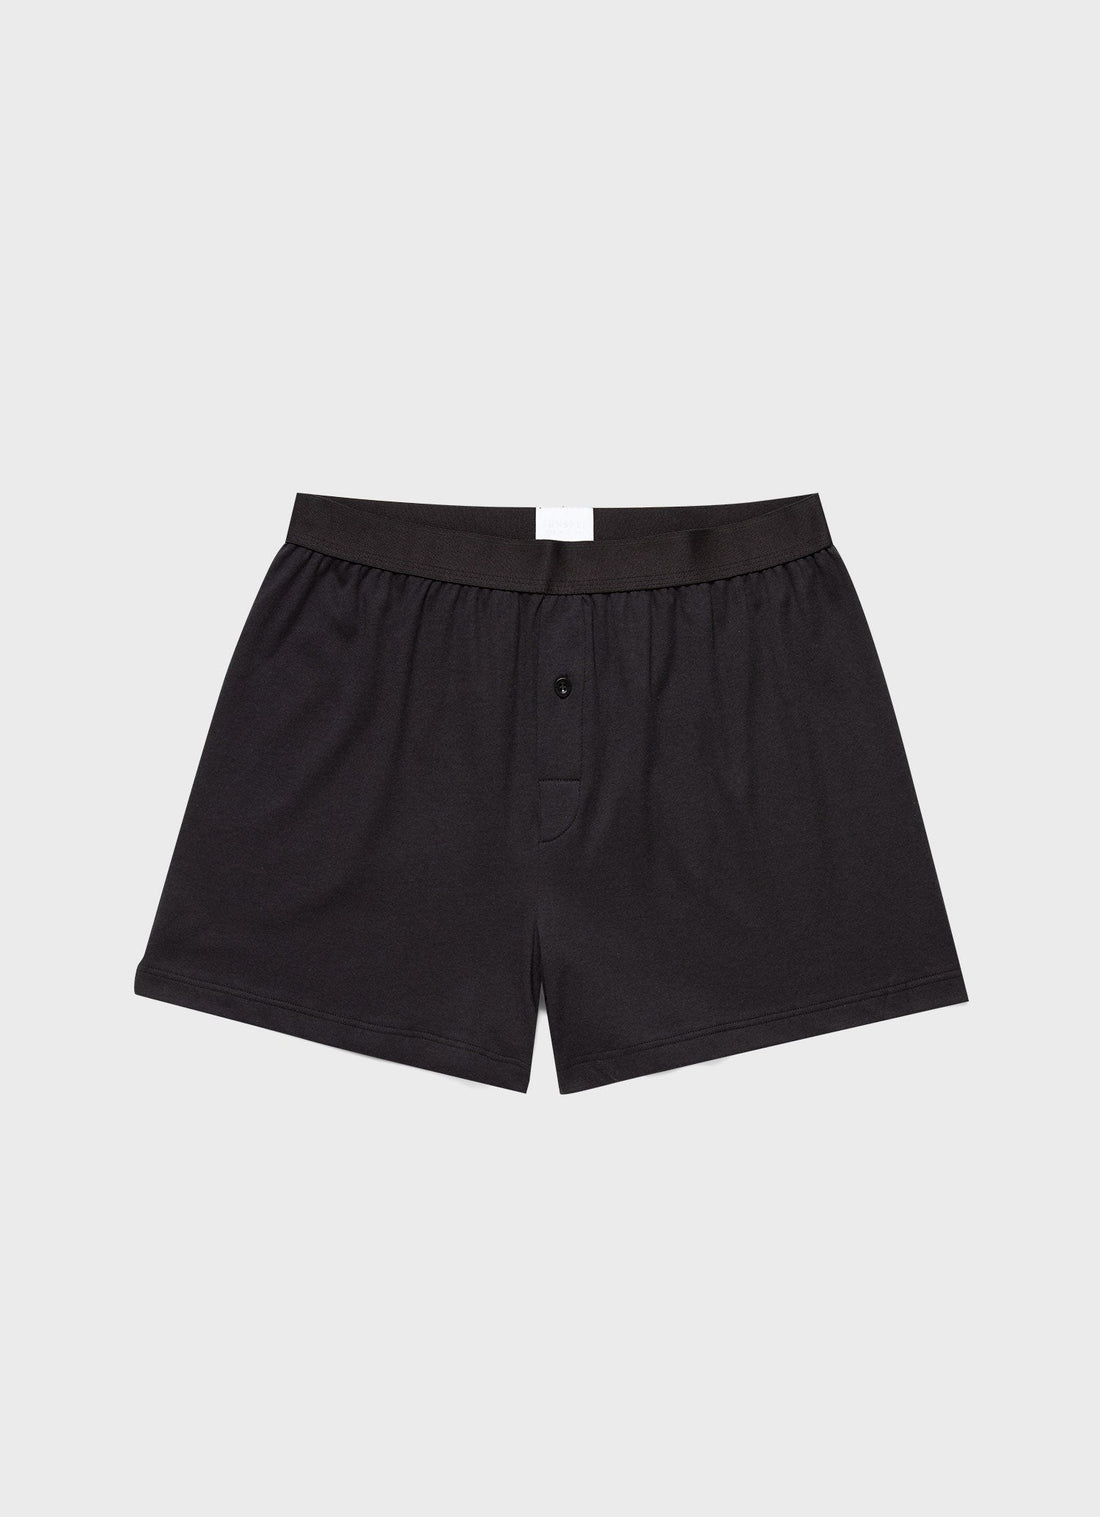 Men's Sea Island Cotton One-Button Shorts in Black